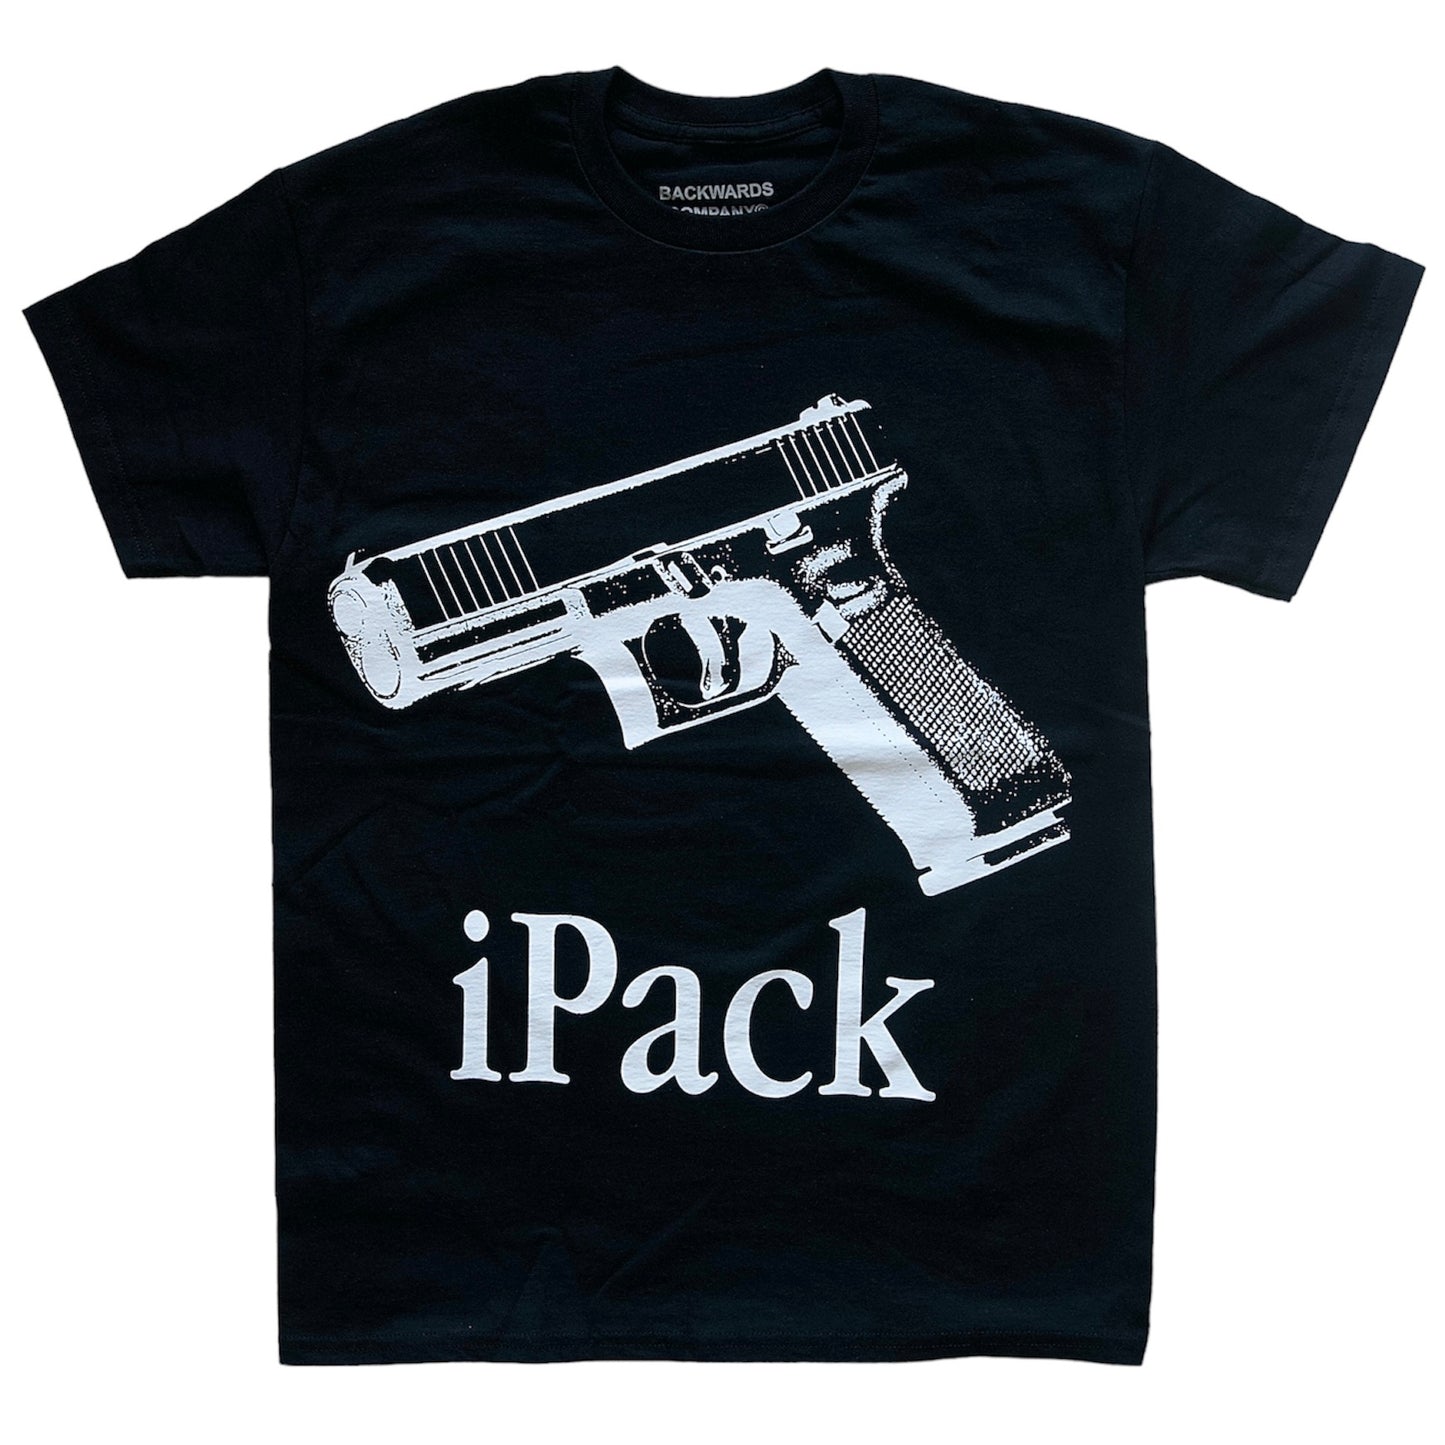 Black “iPack” T-Shirt